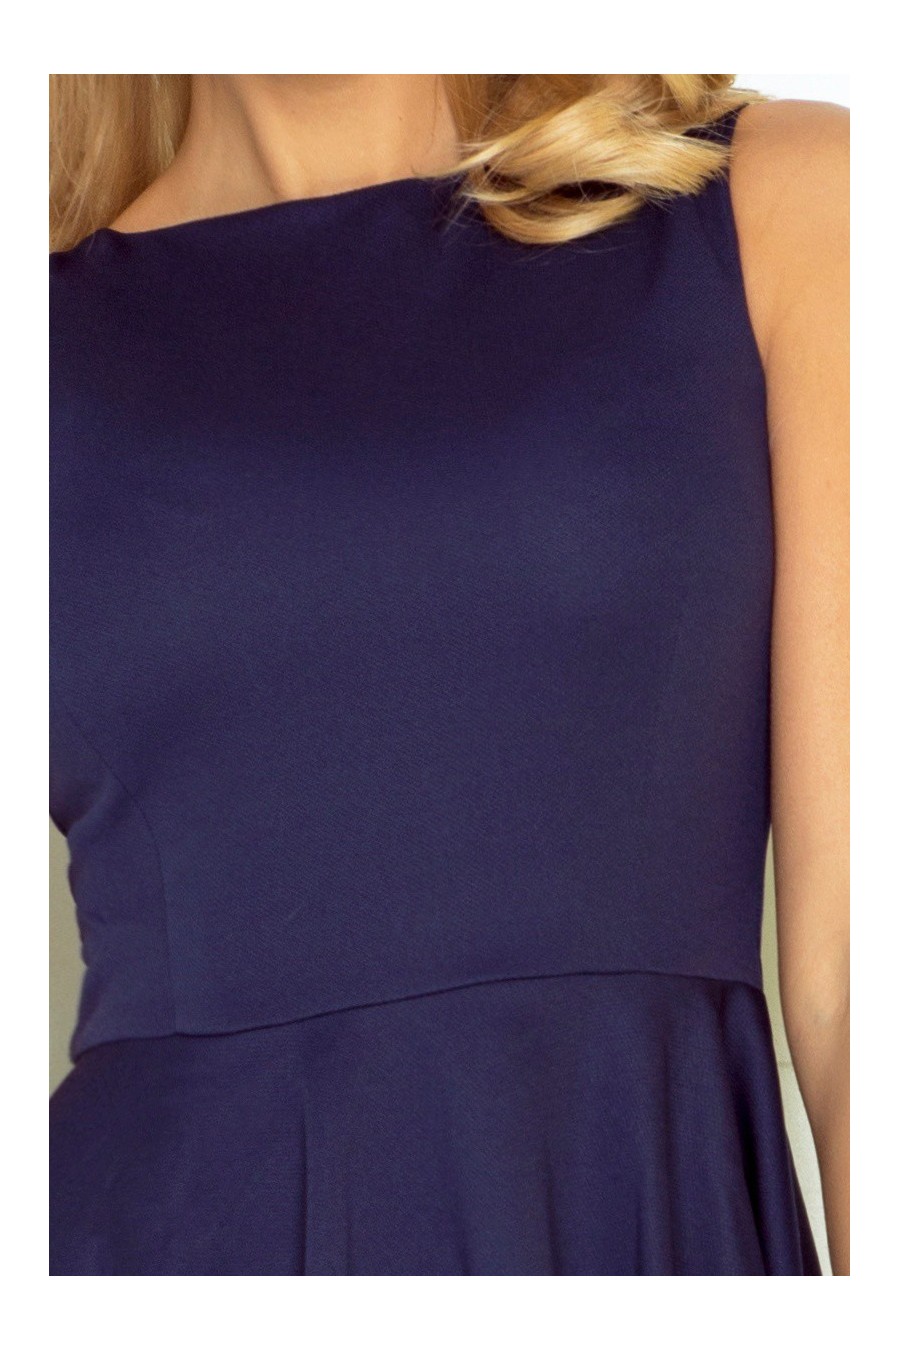 Exclusive asymetrické šaty - tmave modre 33-3